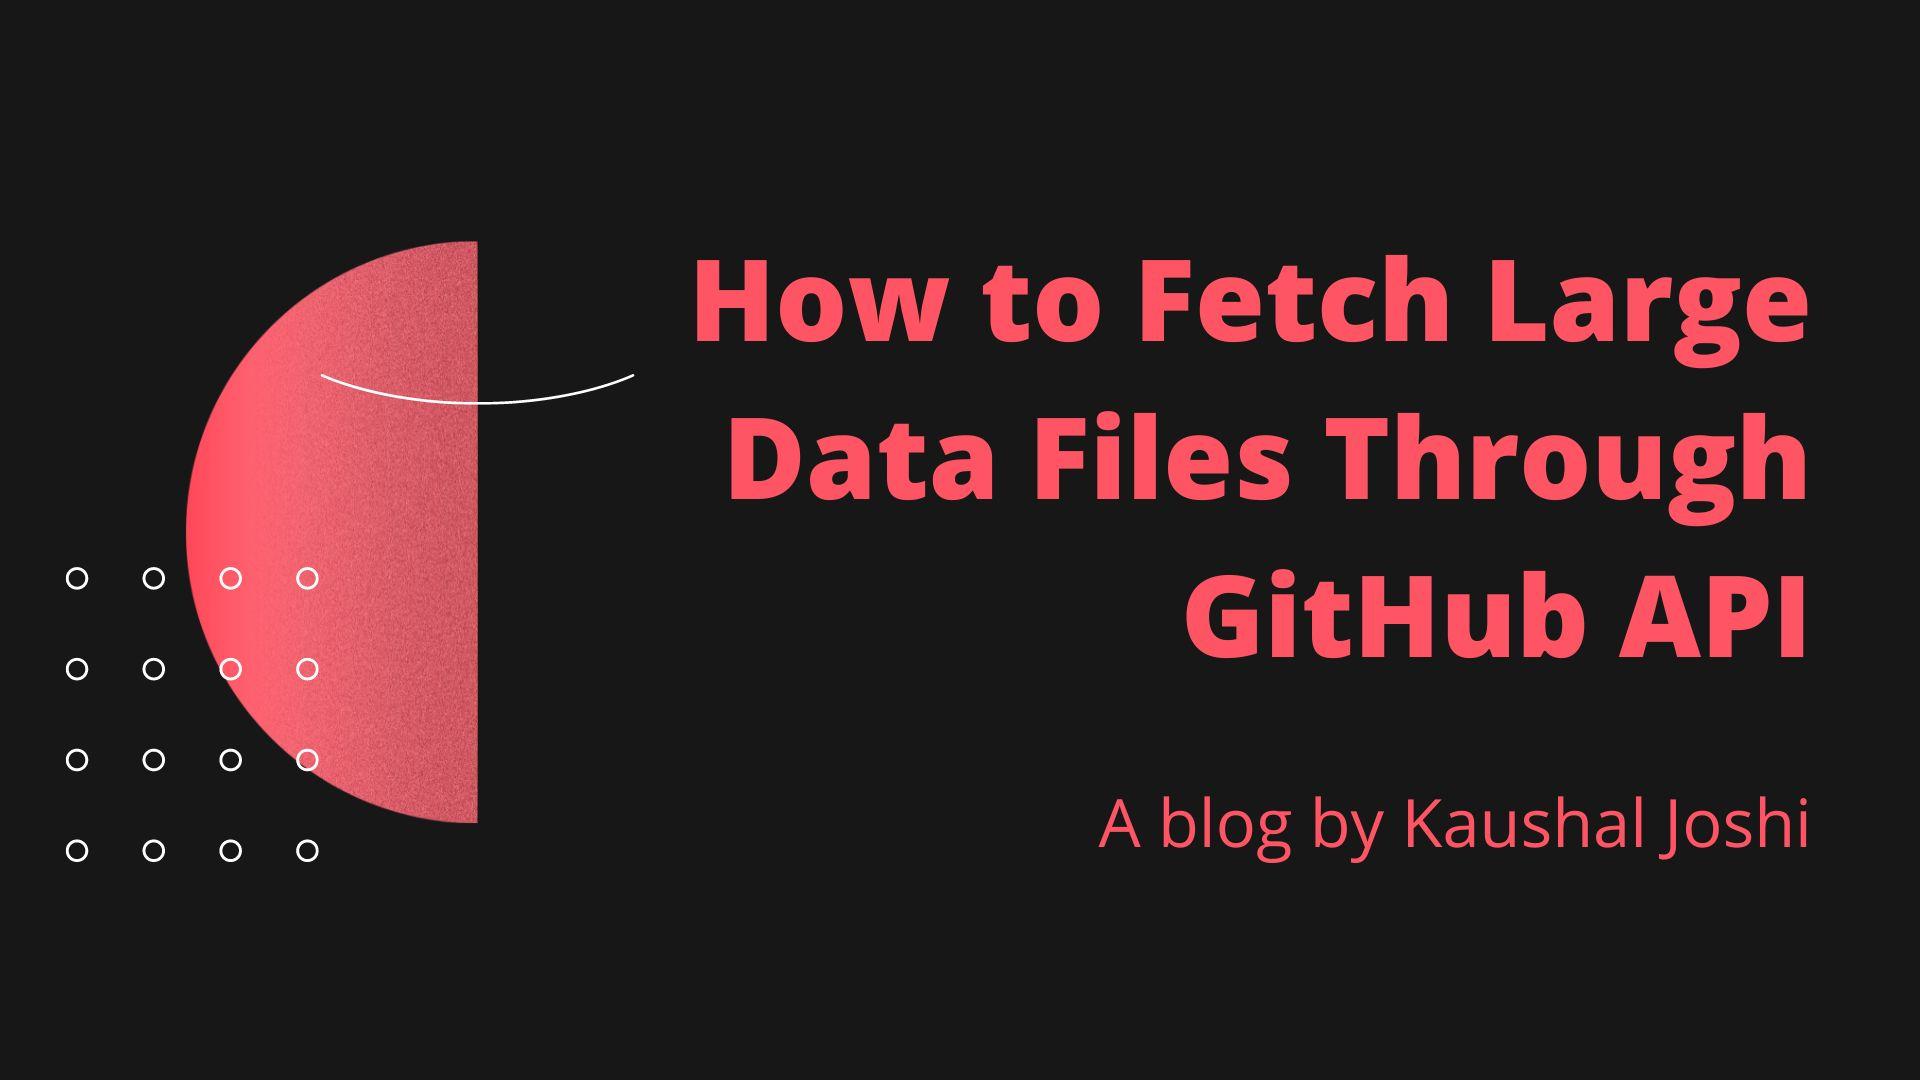 How to Fetch Large Data Files Through GitHub API